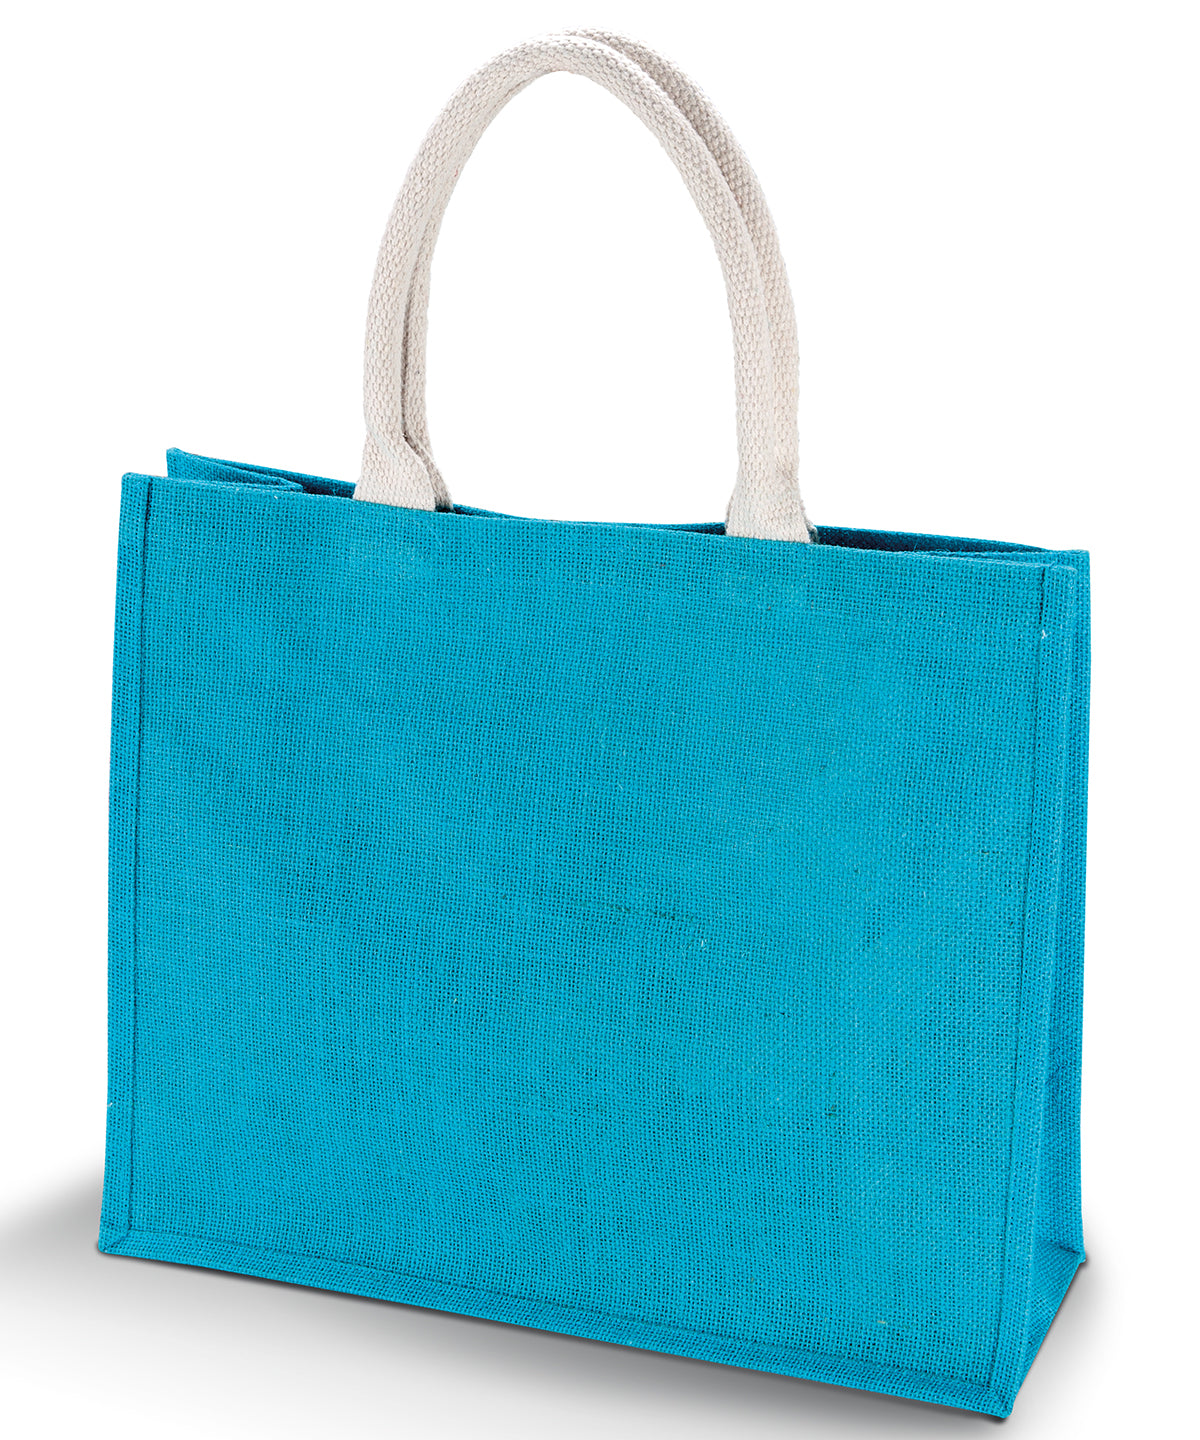 Personalised Bags - Turquoise KiMood Jute beach bag